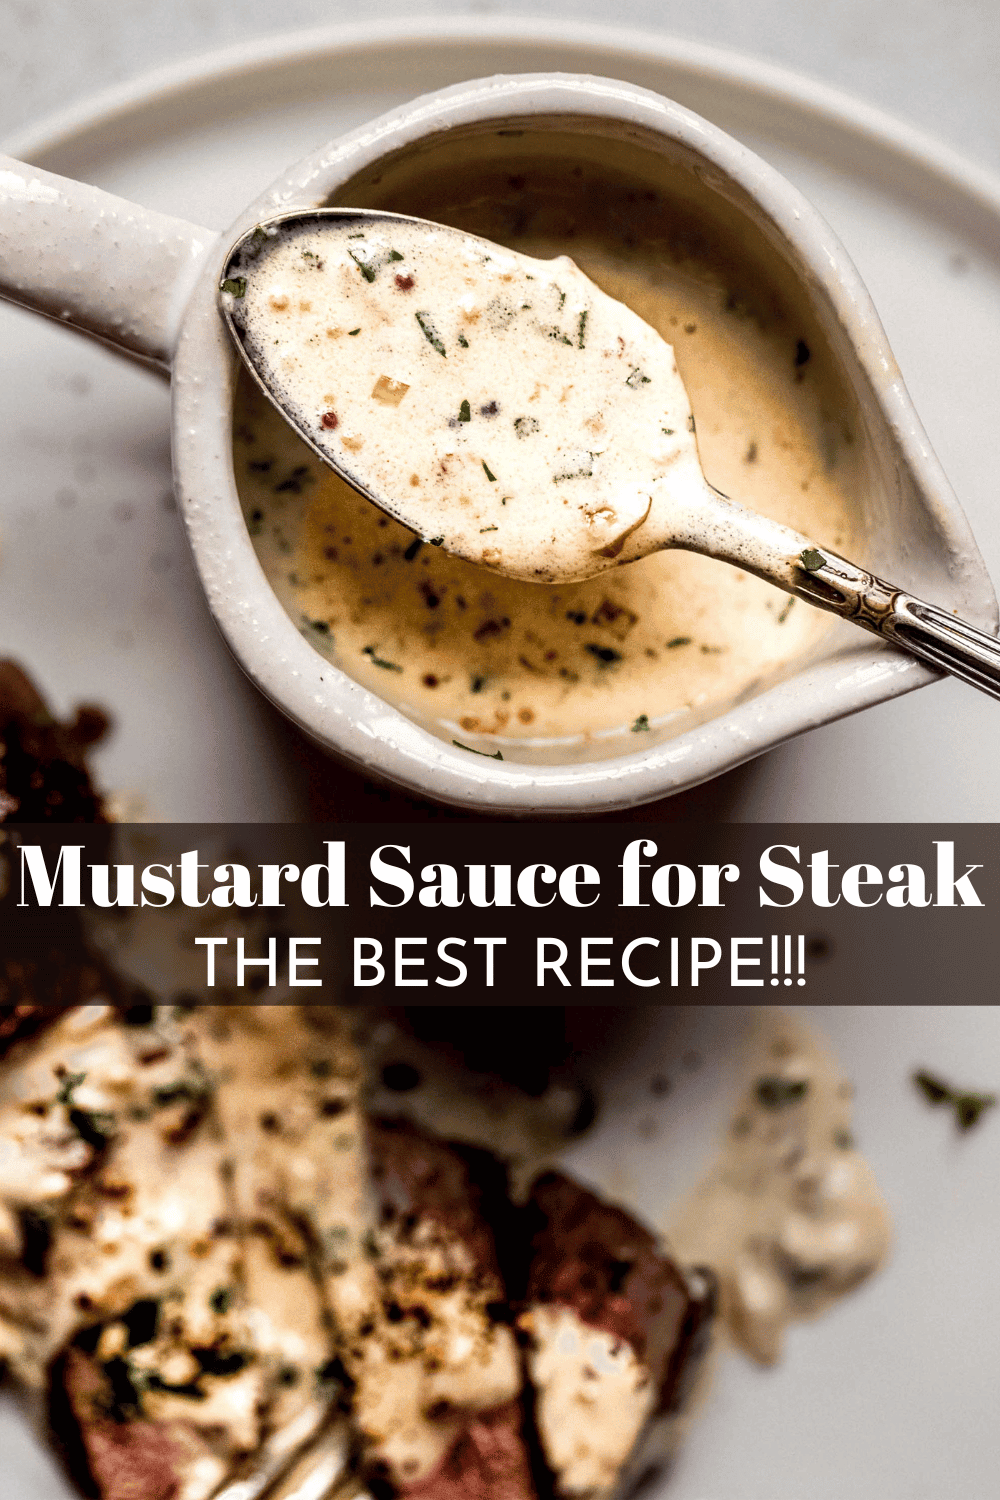 Mustard Sauce for Steak